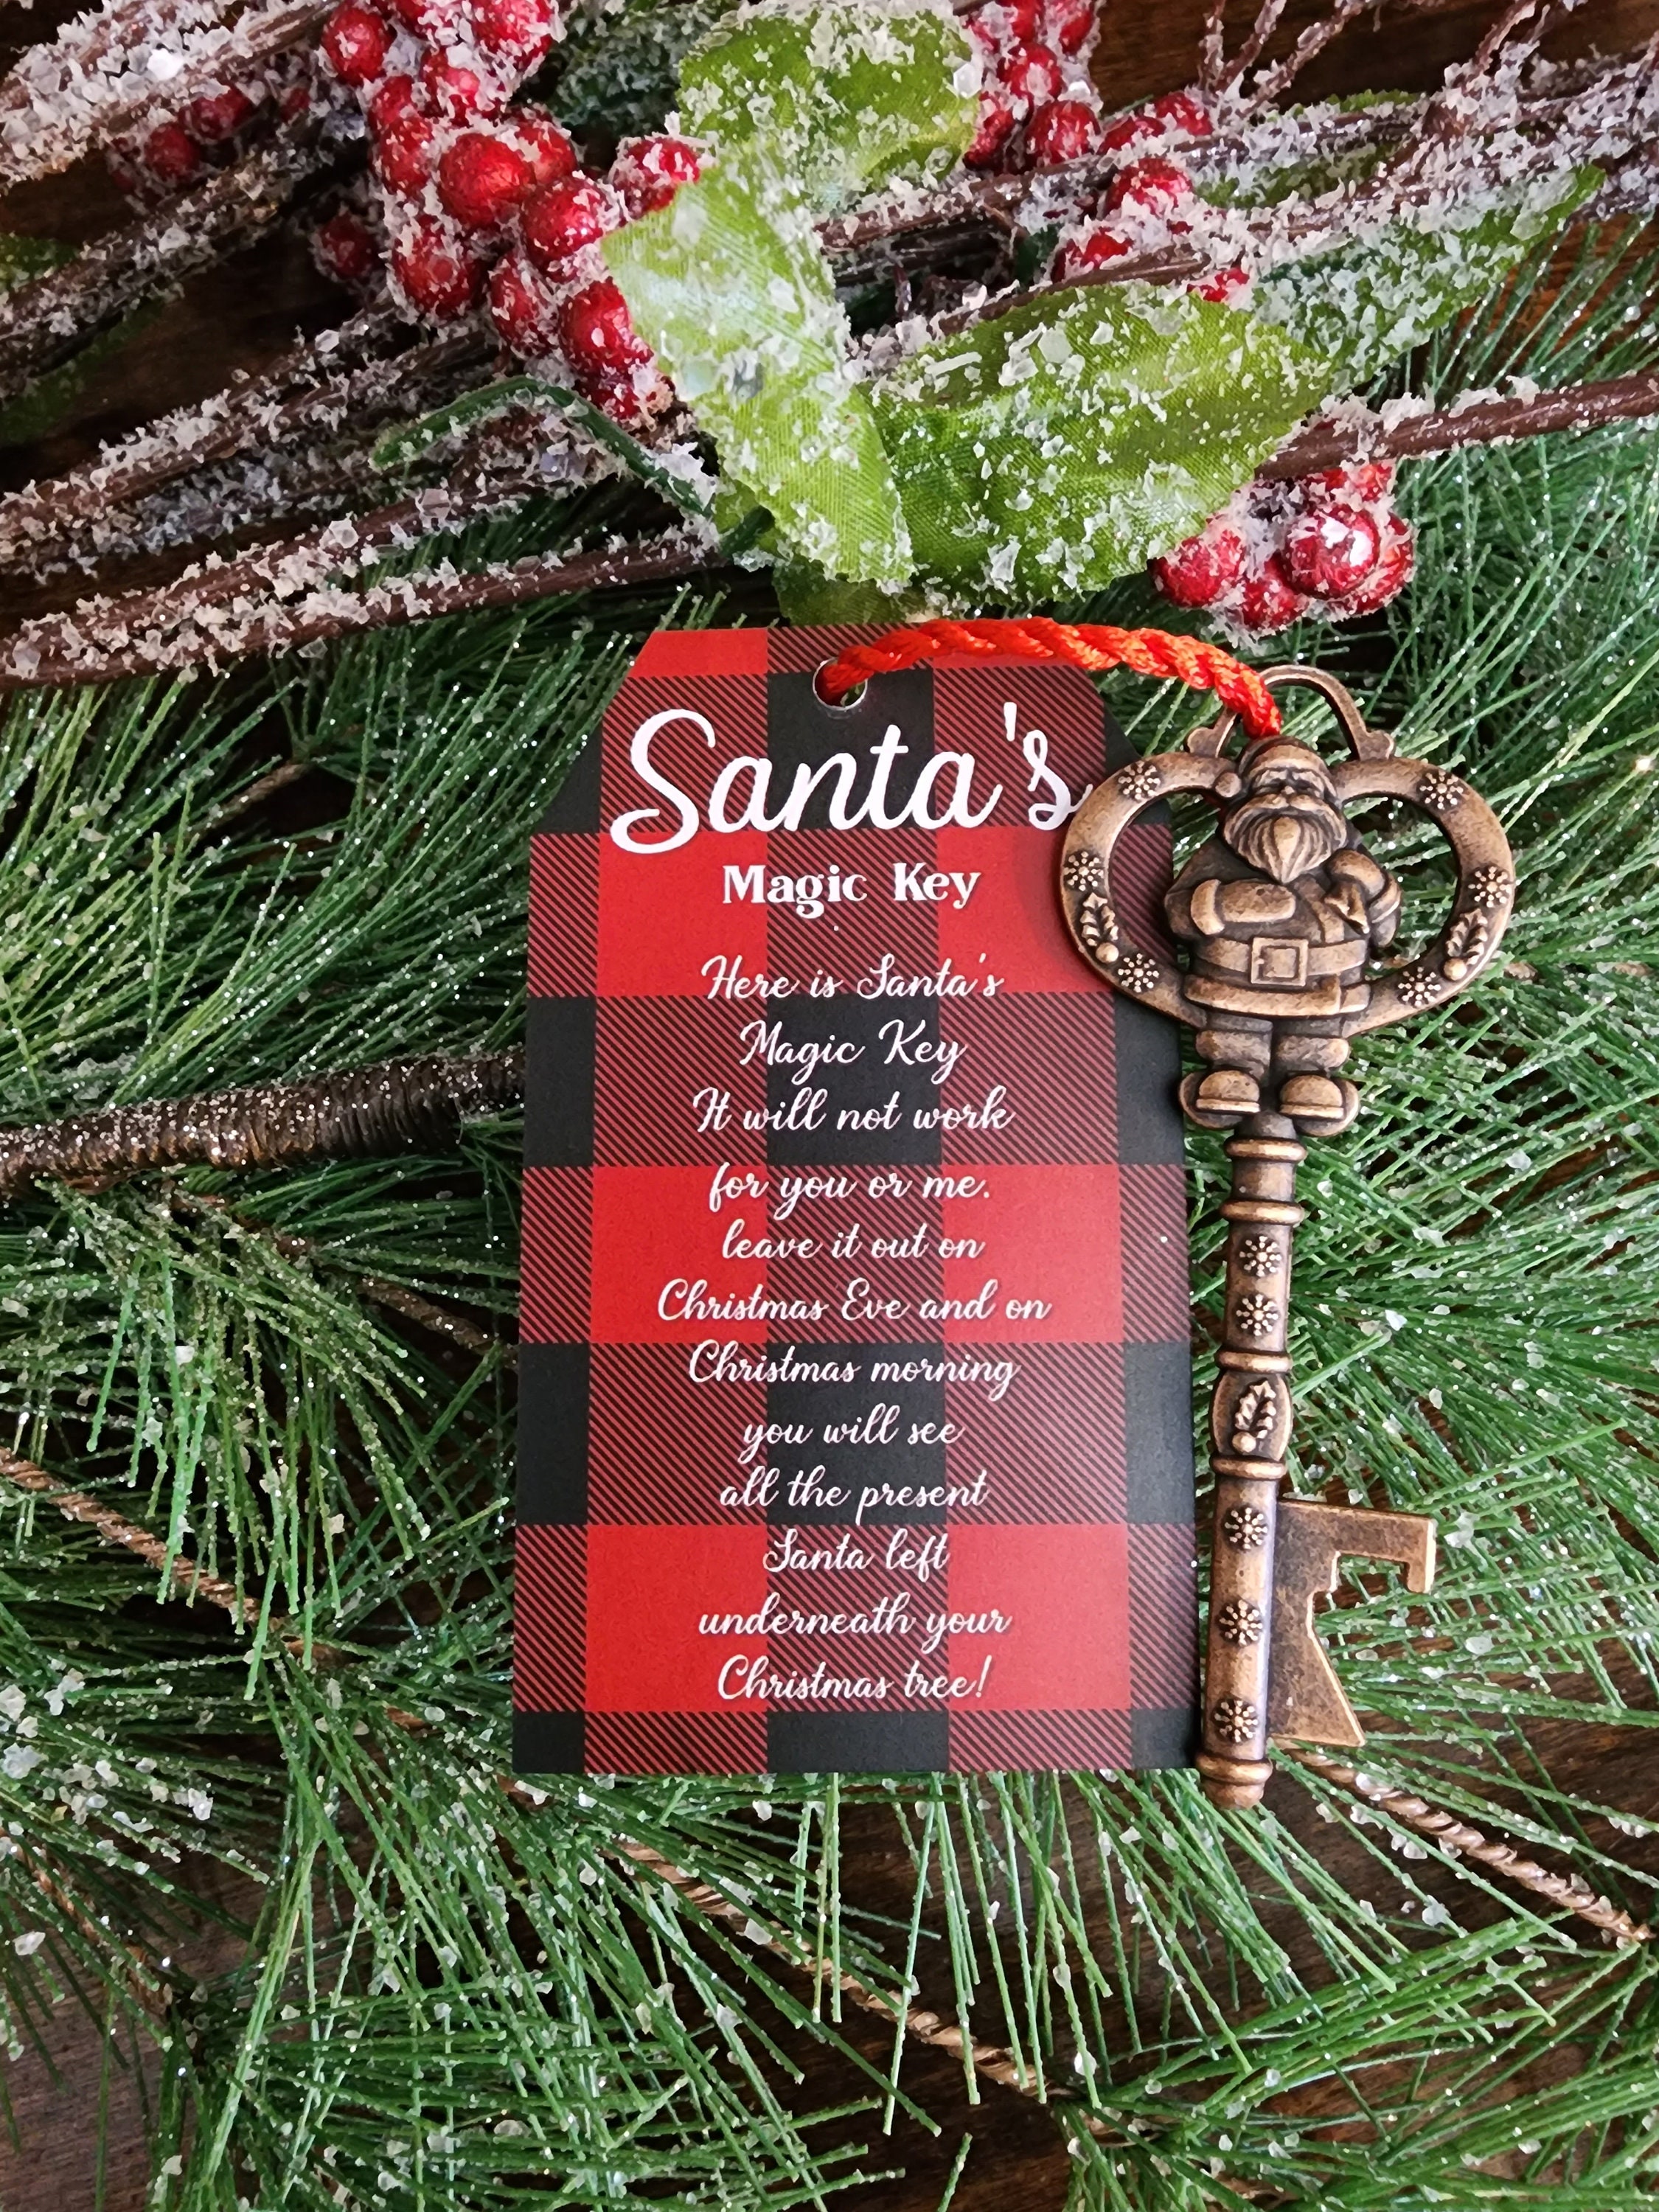  Santa's Key for House with No Chimney Ornament Santa